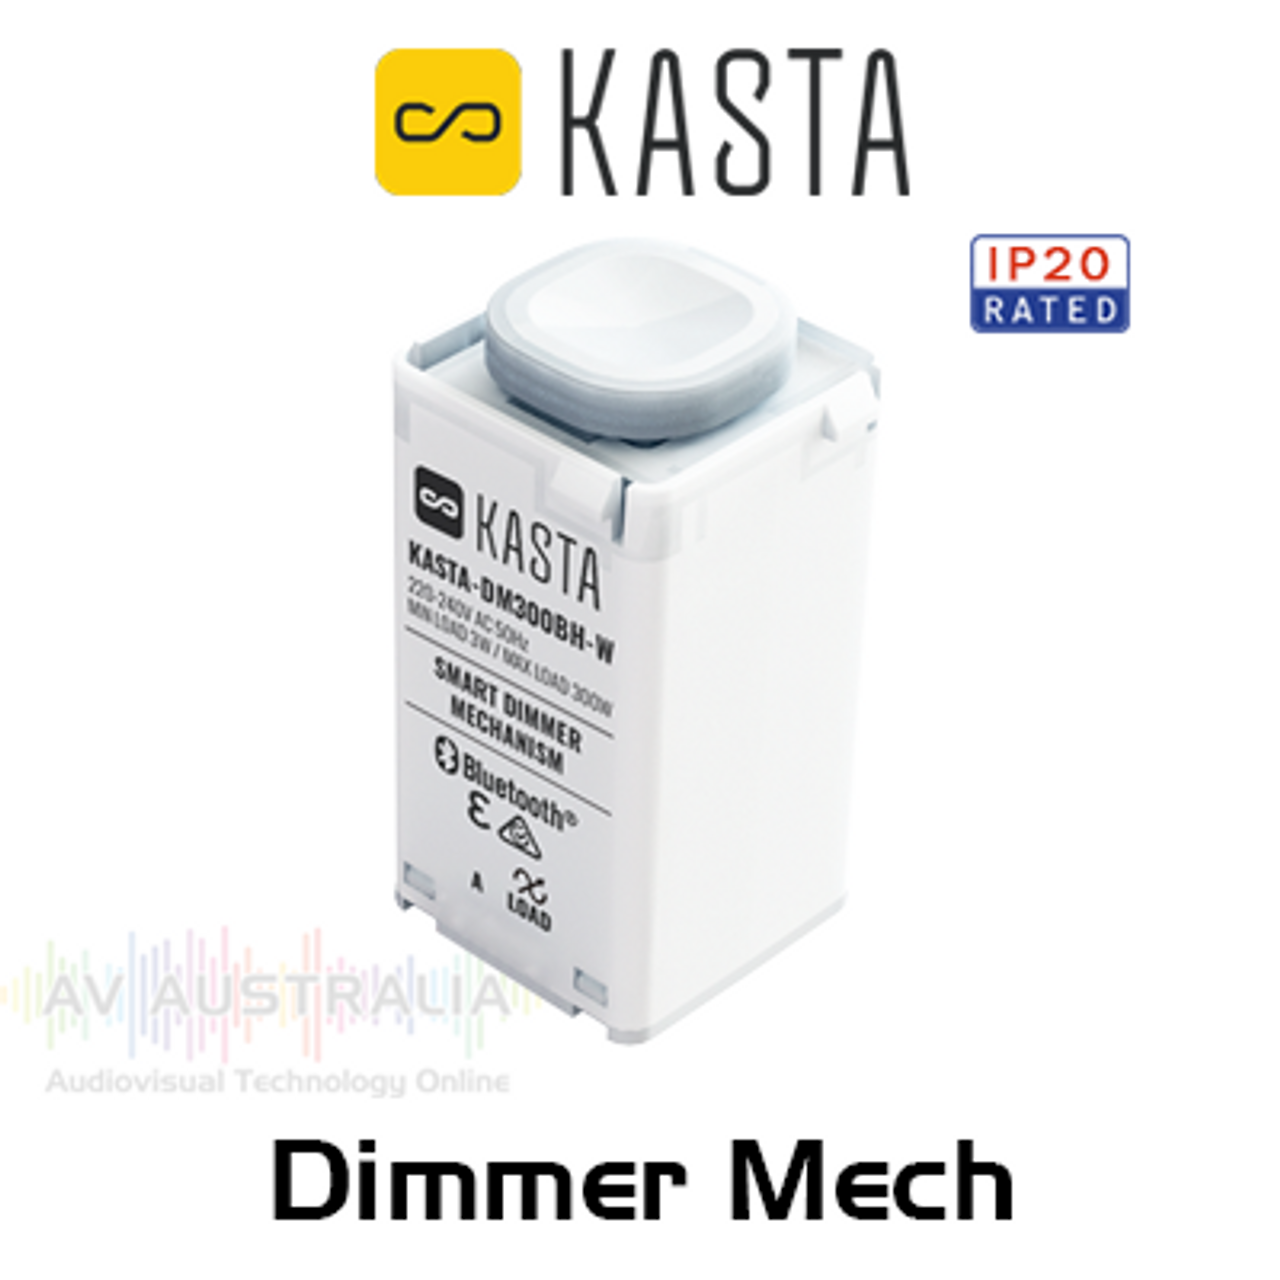 Kasta Smart Push Button Dimmer Mechanism (300W Max)